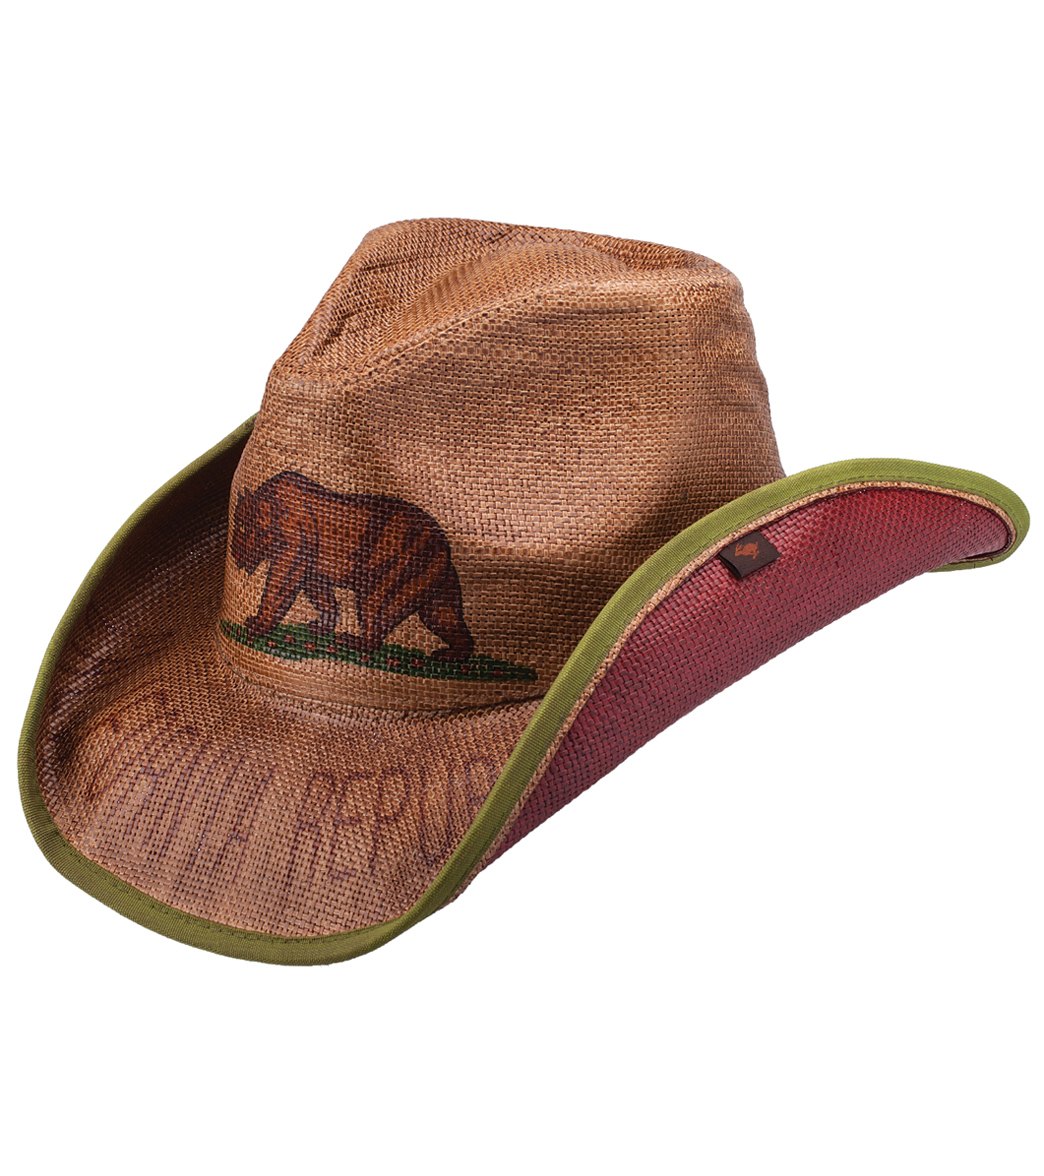 drifter style cowboy hat